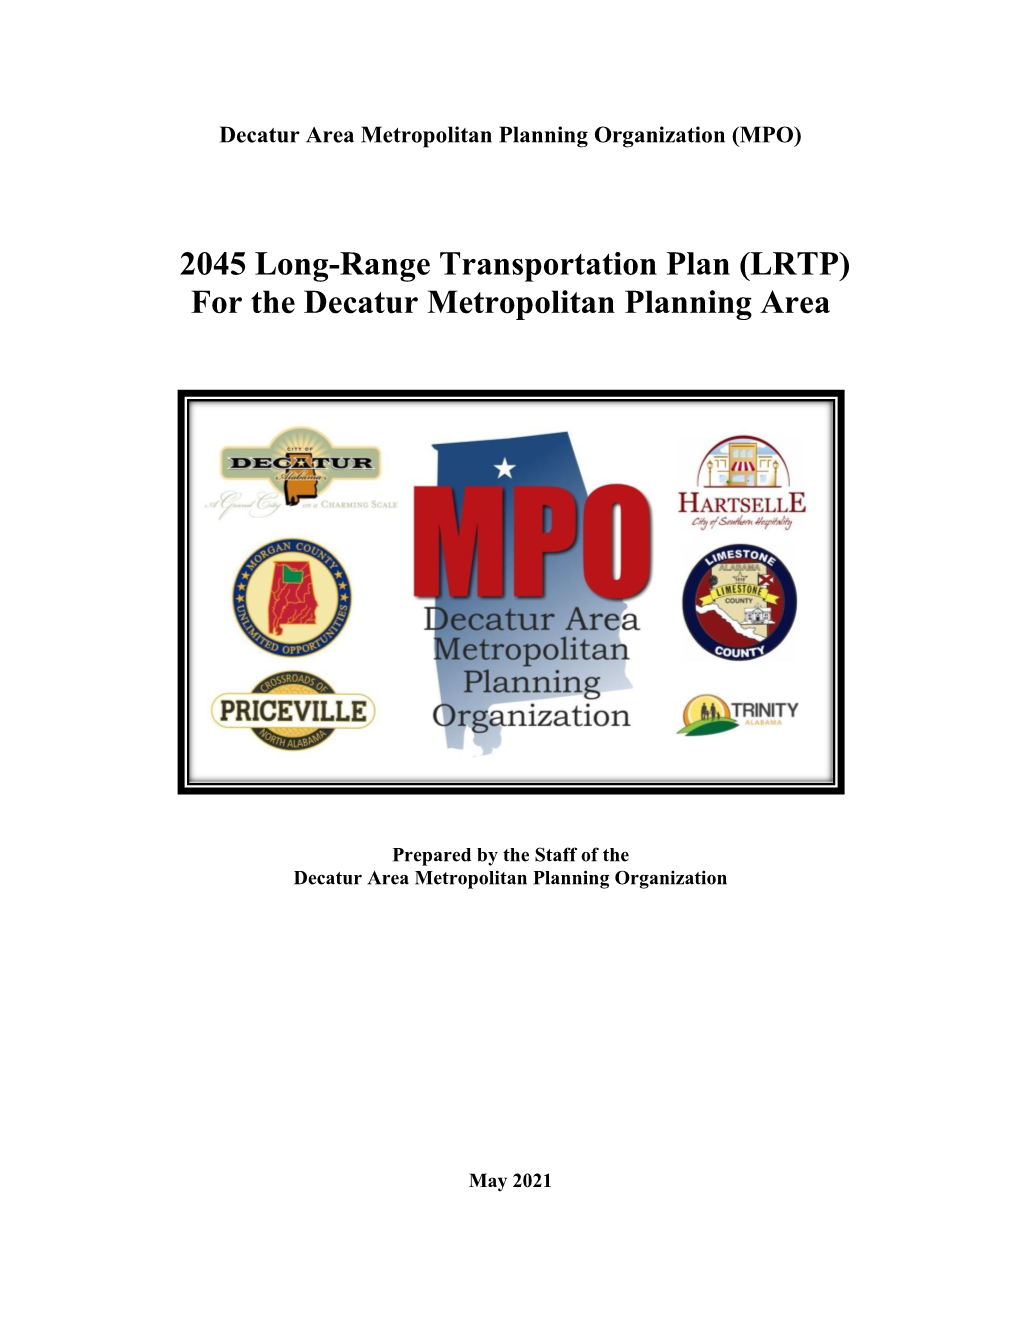 2045 Long-Range Transportation Plan (LRTP) for the Decatur Metropolitan Planning Area